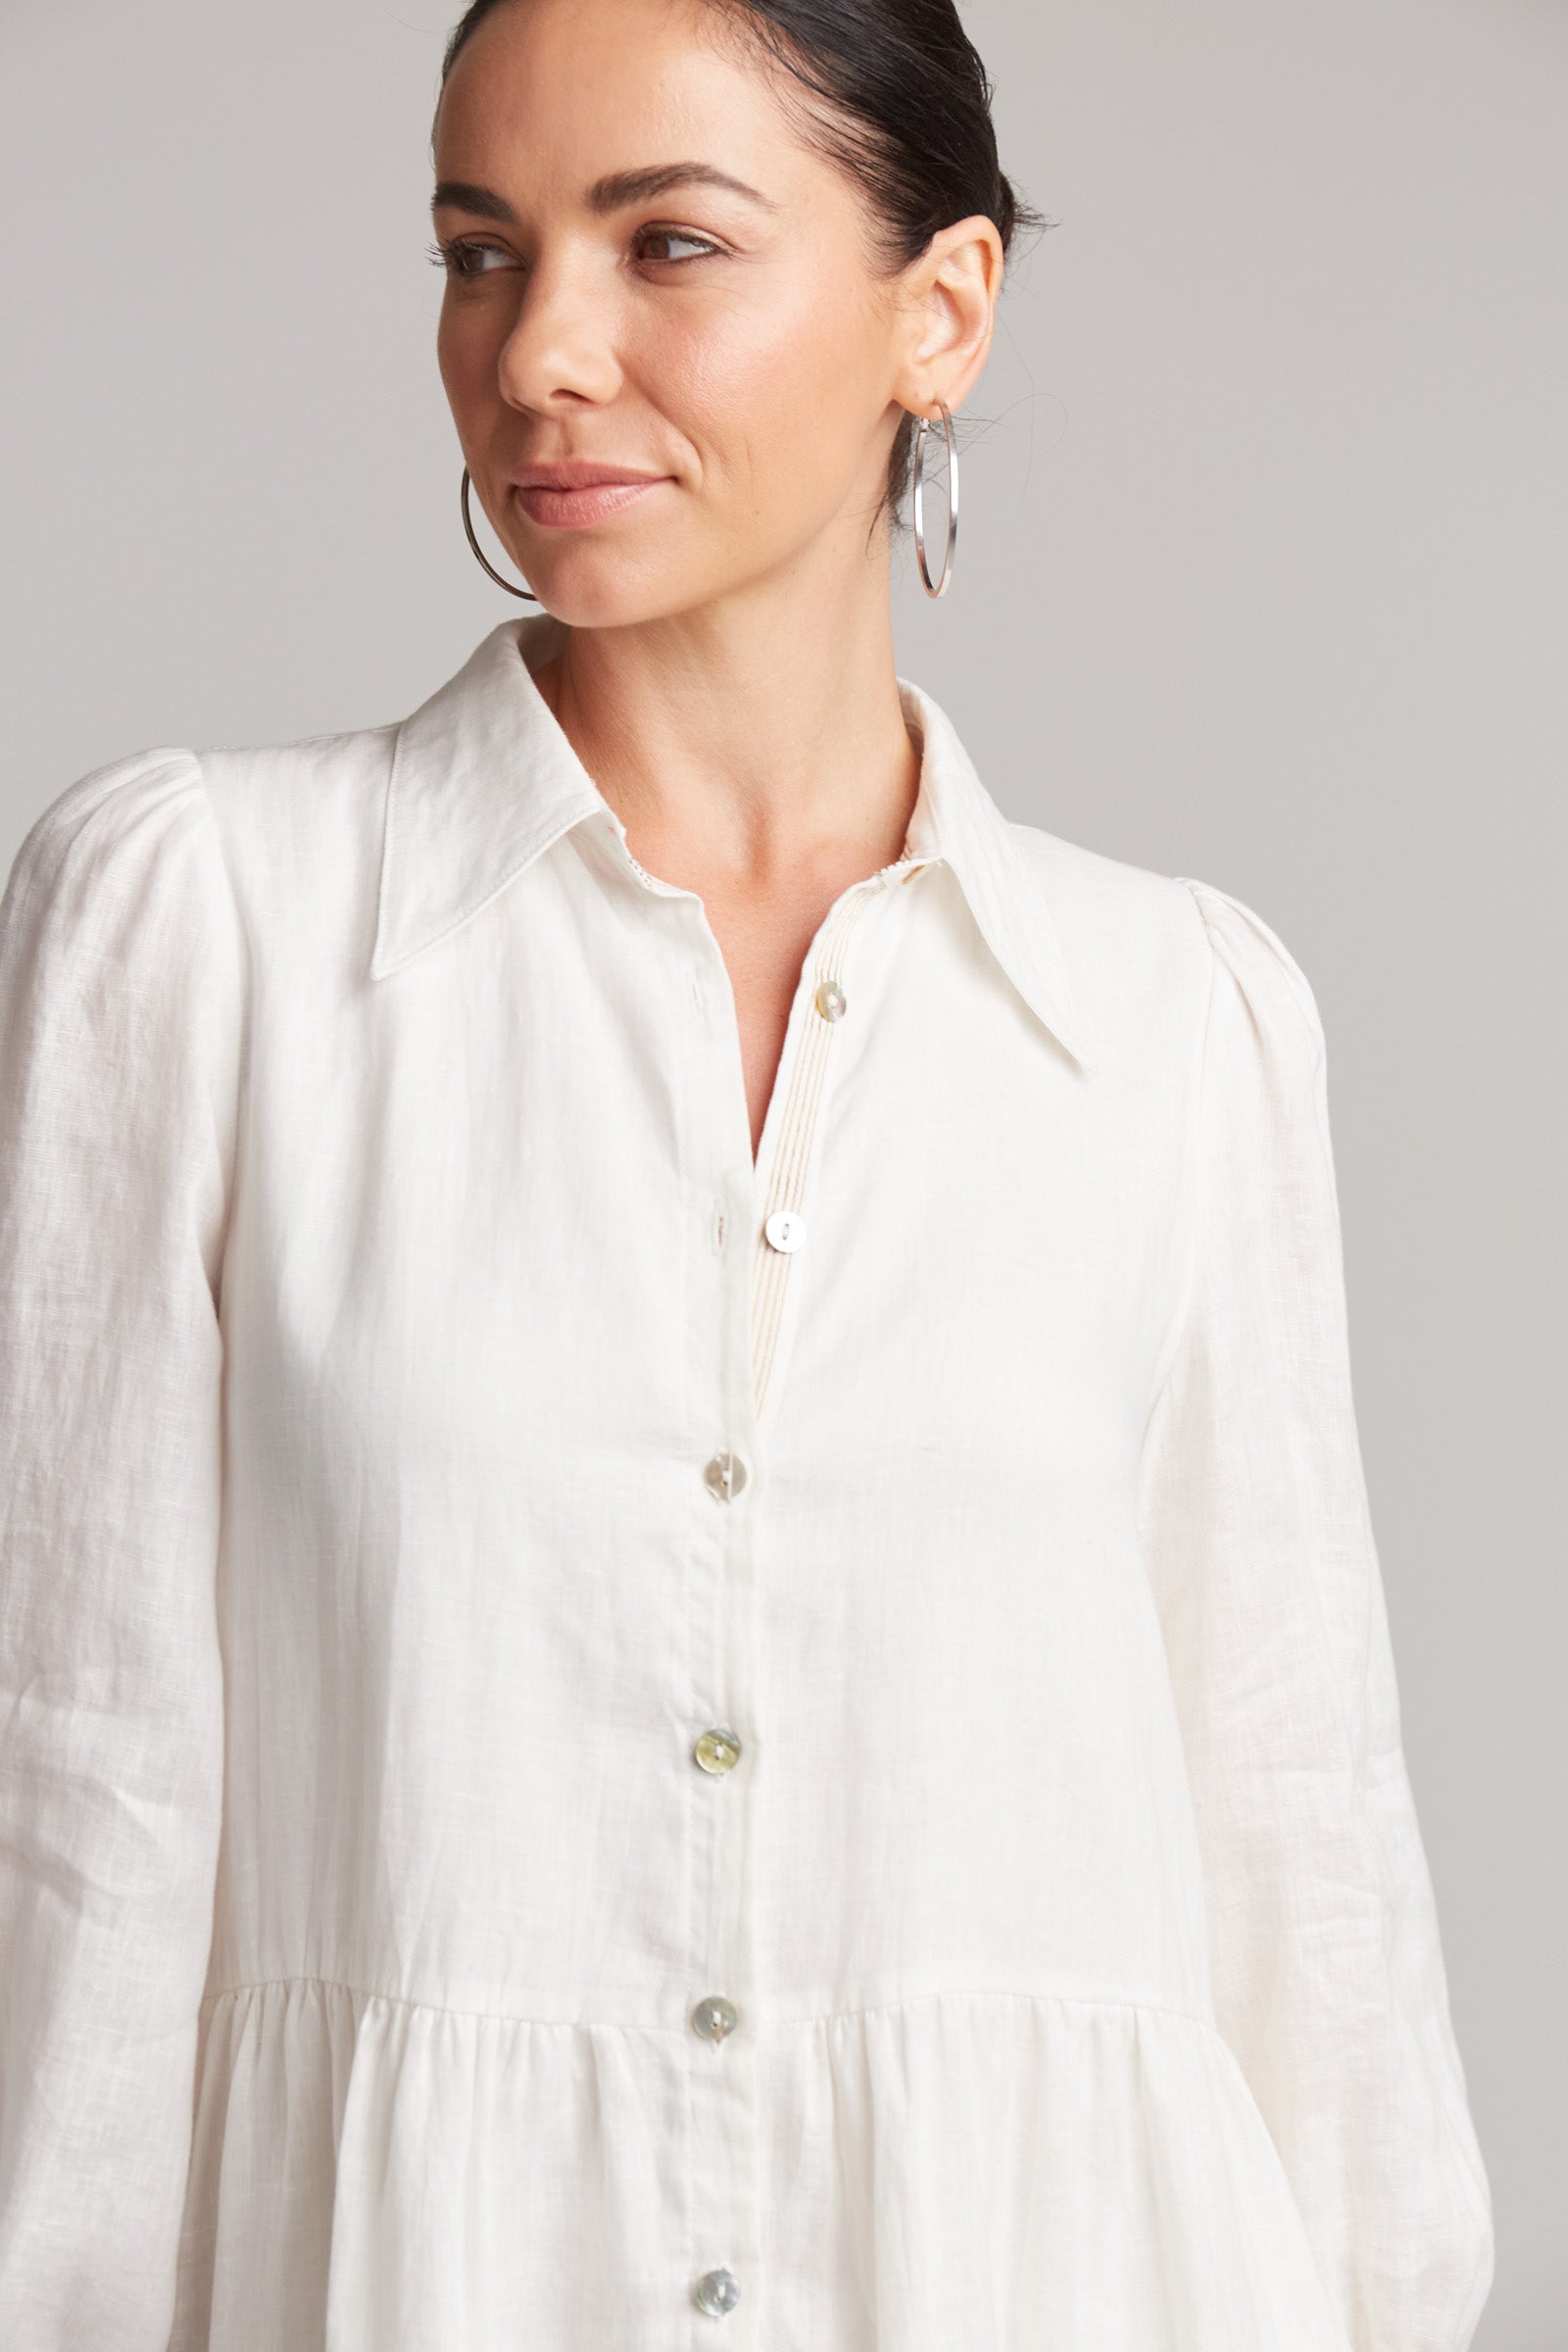 Studio Midi Shirt Dress - Salt - eb&ive Clothing - Dress Mid Linen